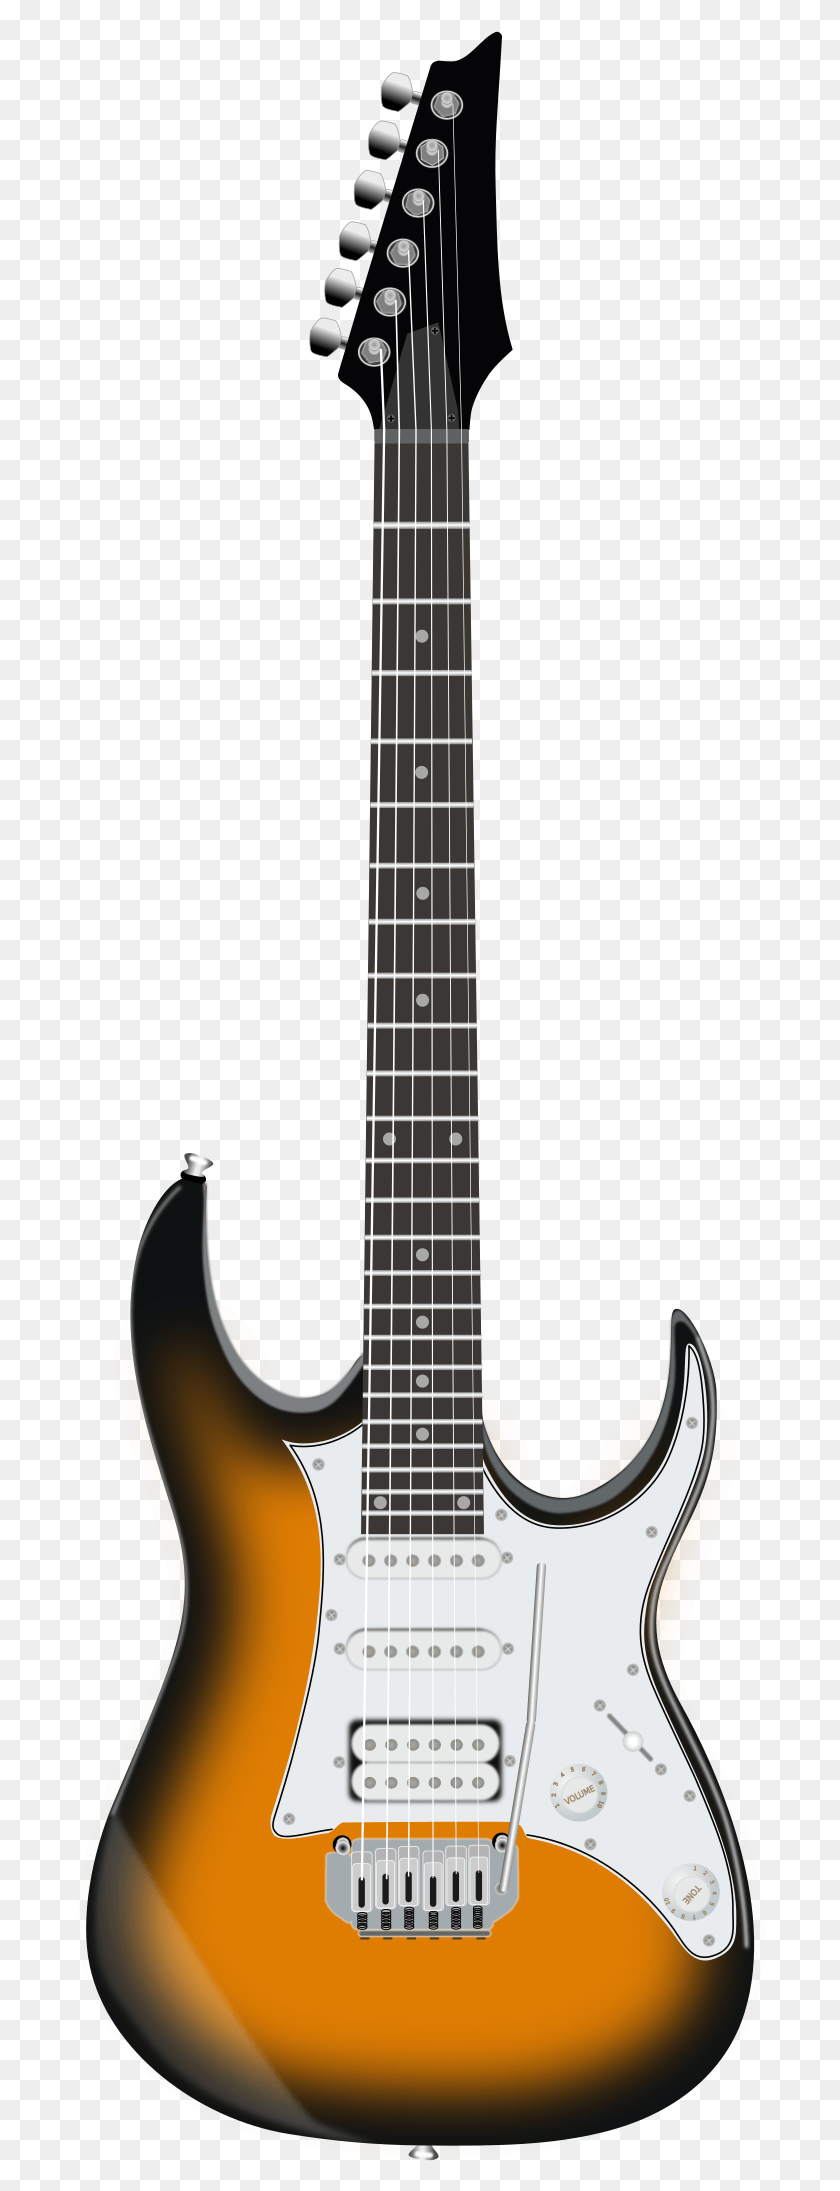 696x2131 This Free Icons Design Of Ibanez Guitarra Eléctrica, Guitarra, Actividades De Ocio, Instrumento Musical Hd Png Descargar